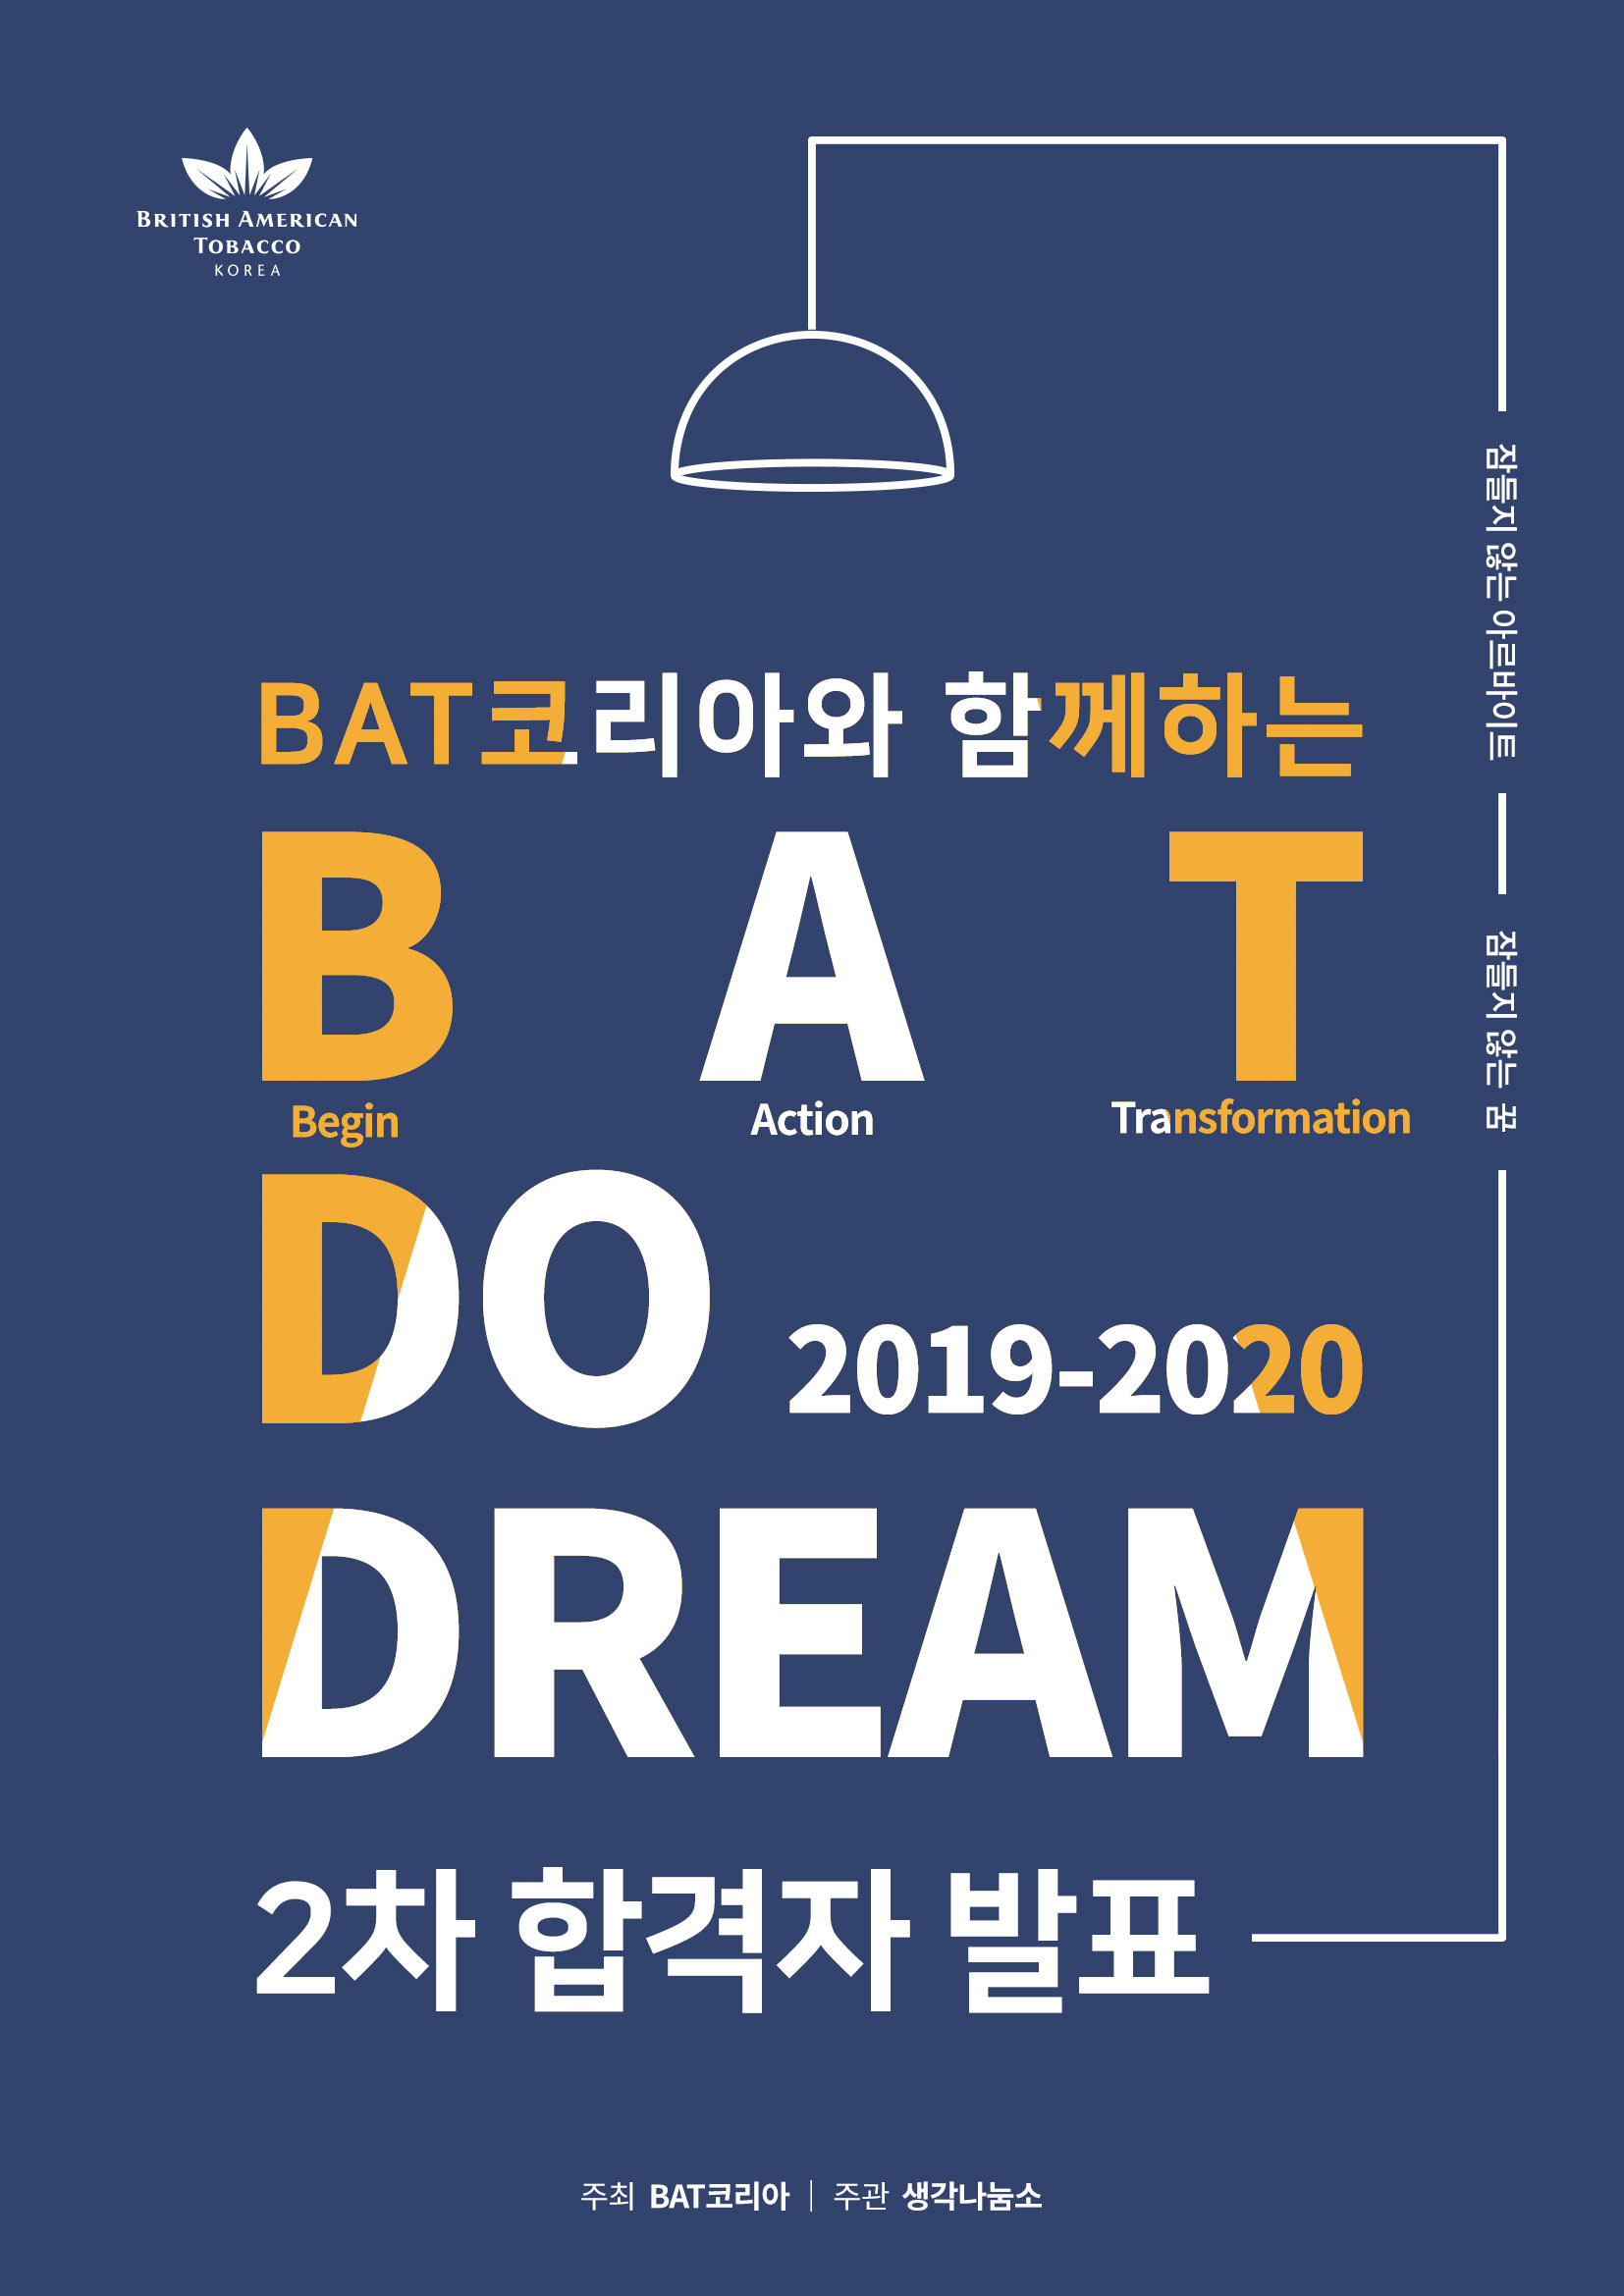 BAT코리아와 함께하는  BAT 두드림(Do-Dream) 공모전 2차 합격자 발표 포스터